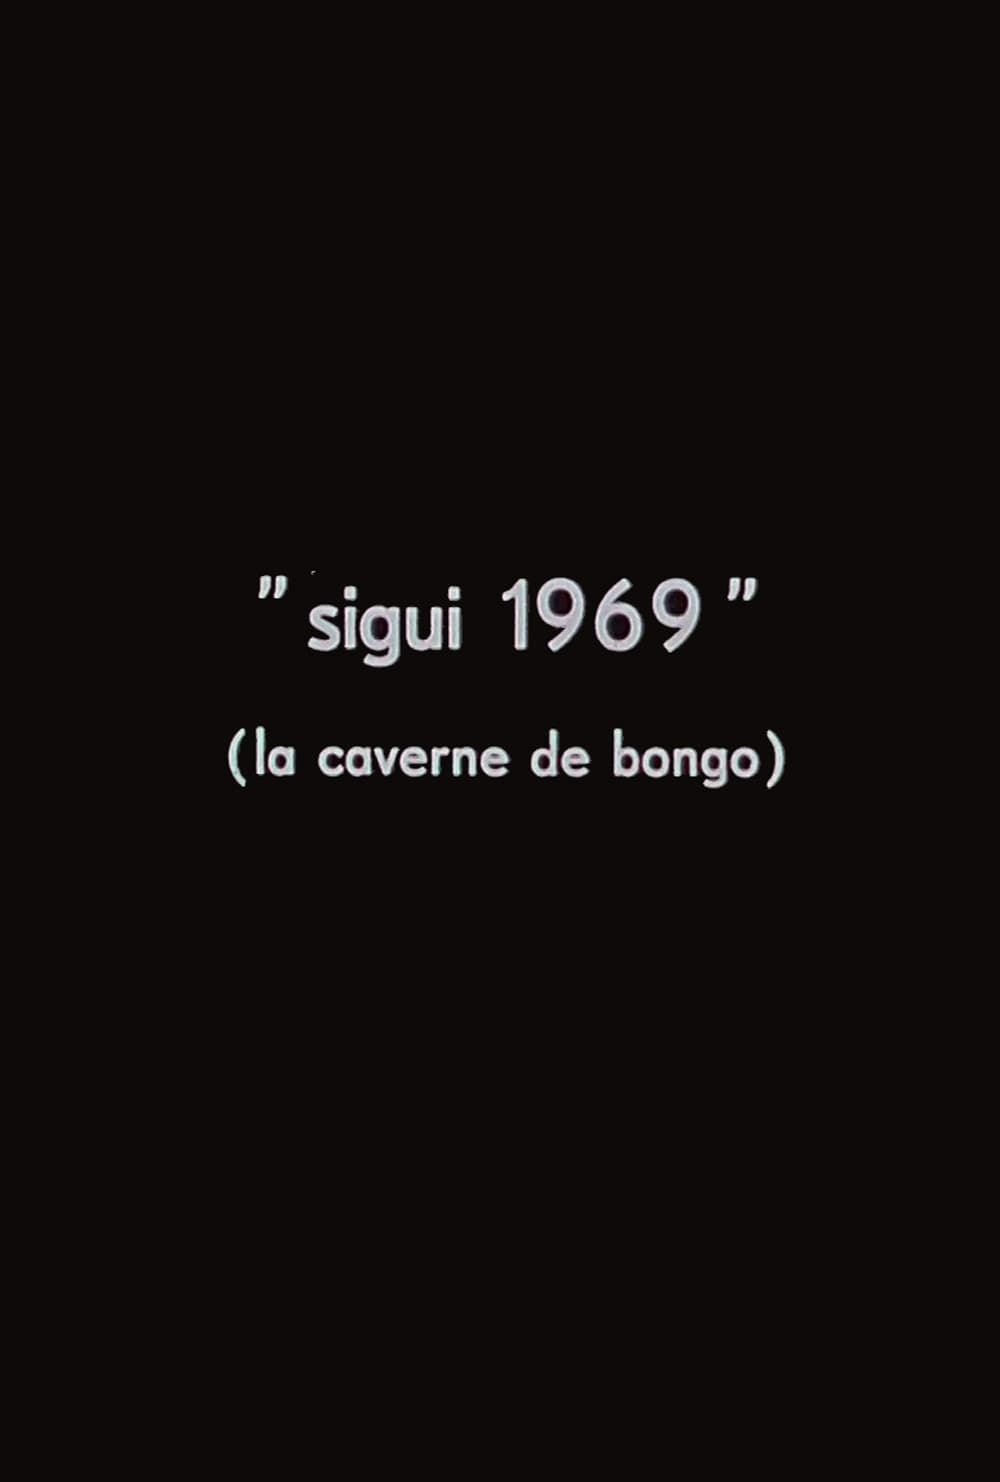 Sigui 1969: The Cave of Bongo